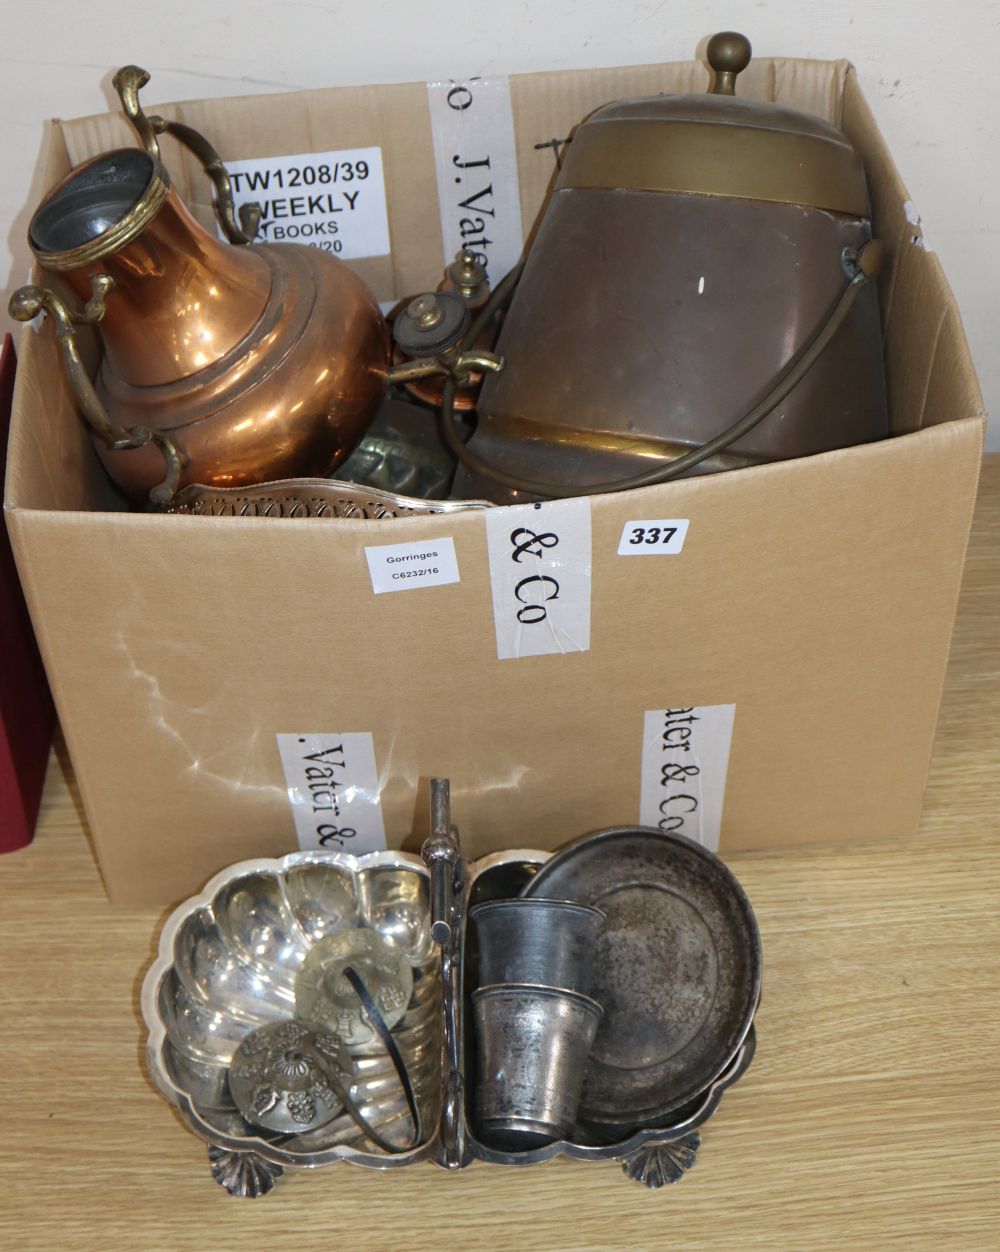 Assorted metalware including copper